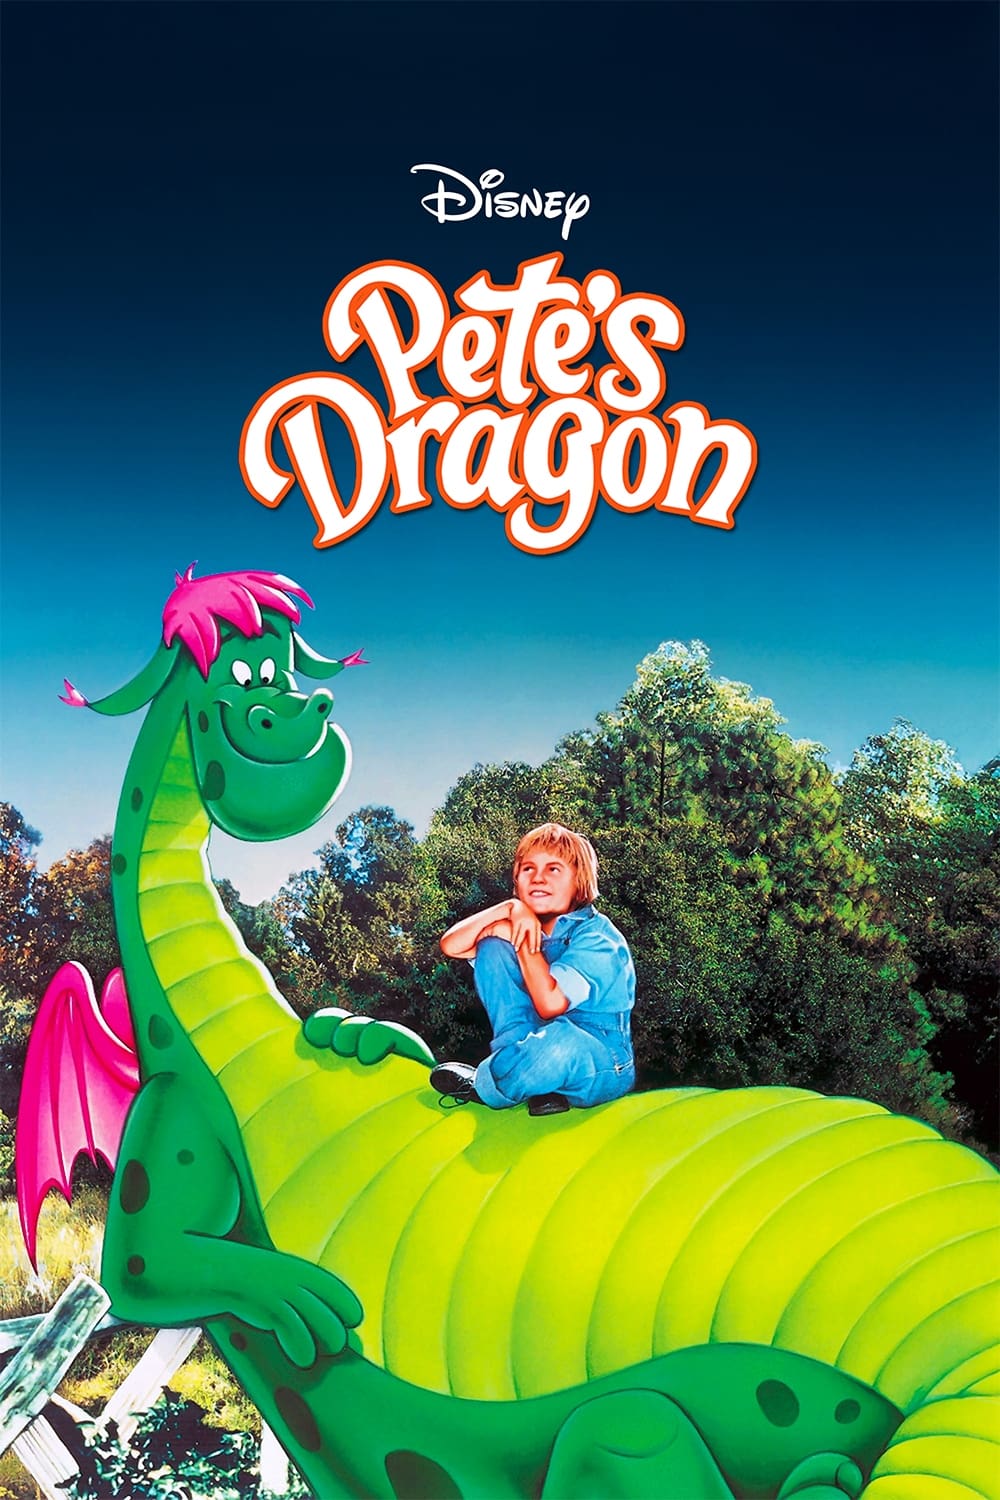 movie reissue 1984 PRINT POSTER FR 339724 Pete's Dragon 1977 